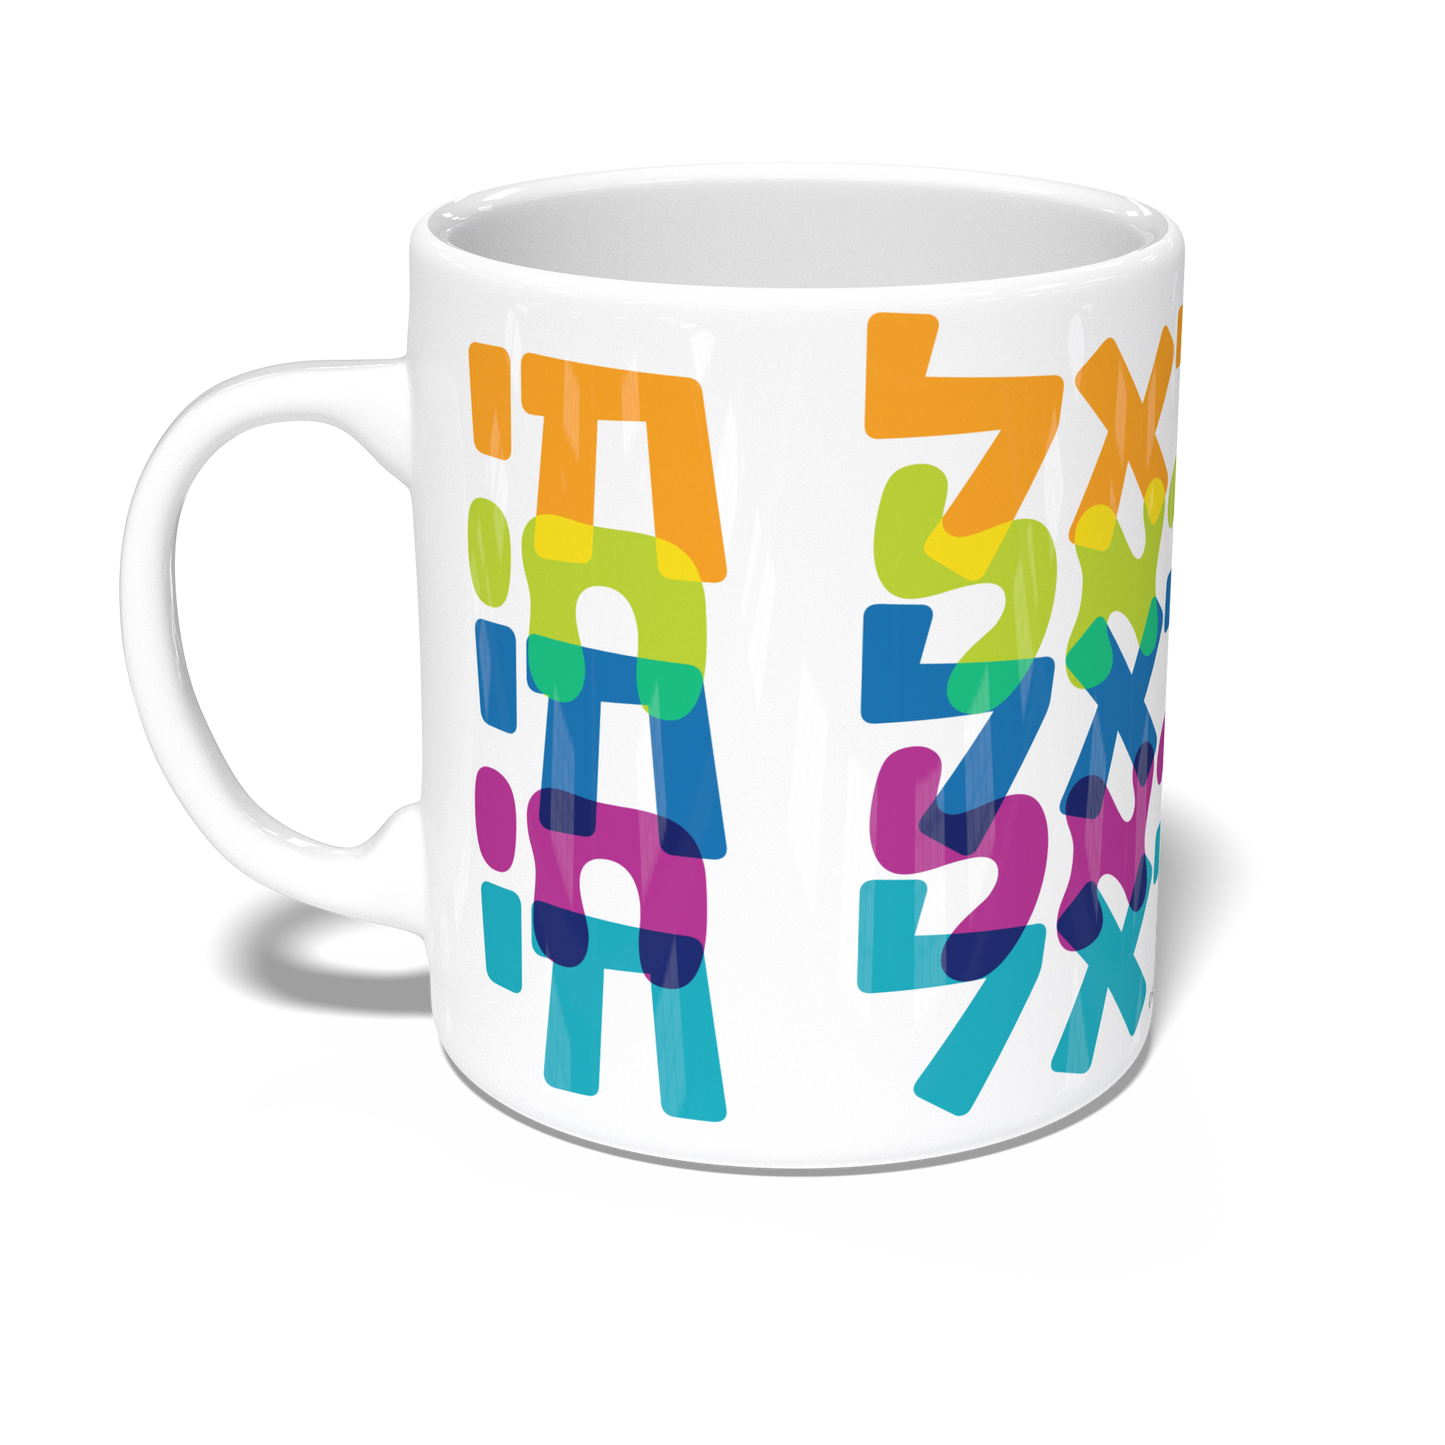 Am Yisrael Chai mug